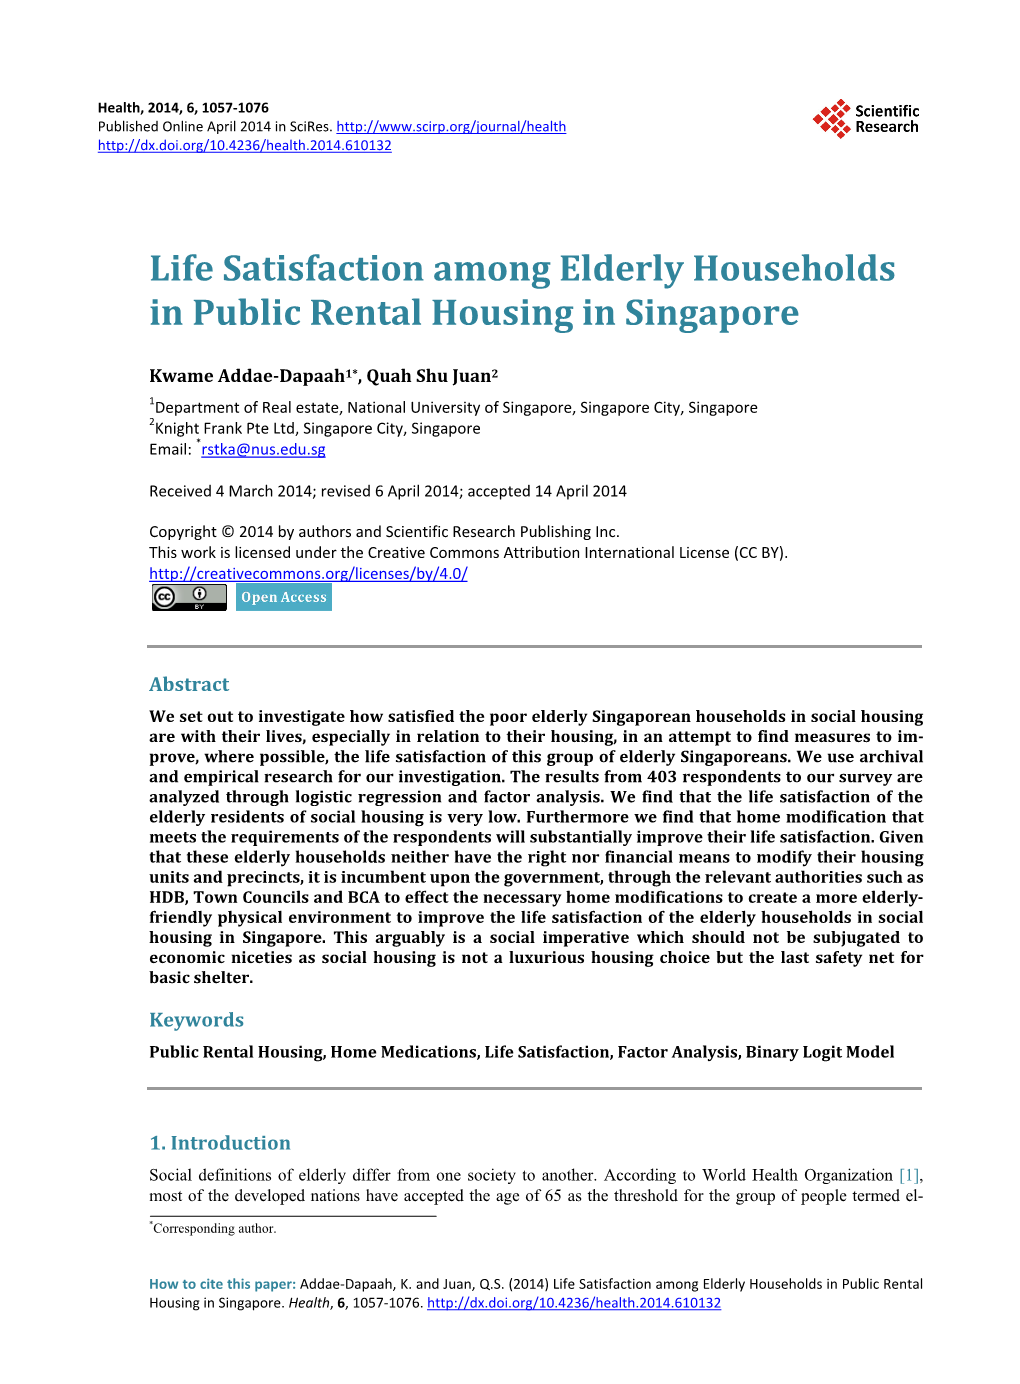 Life Satisfaction Among Elderly Households in Public Rental Housing in Singapore